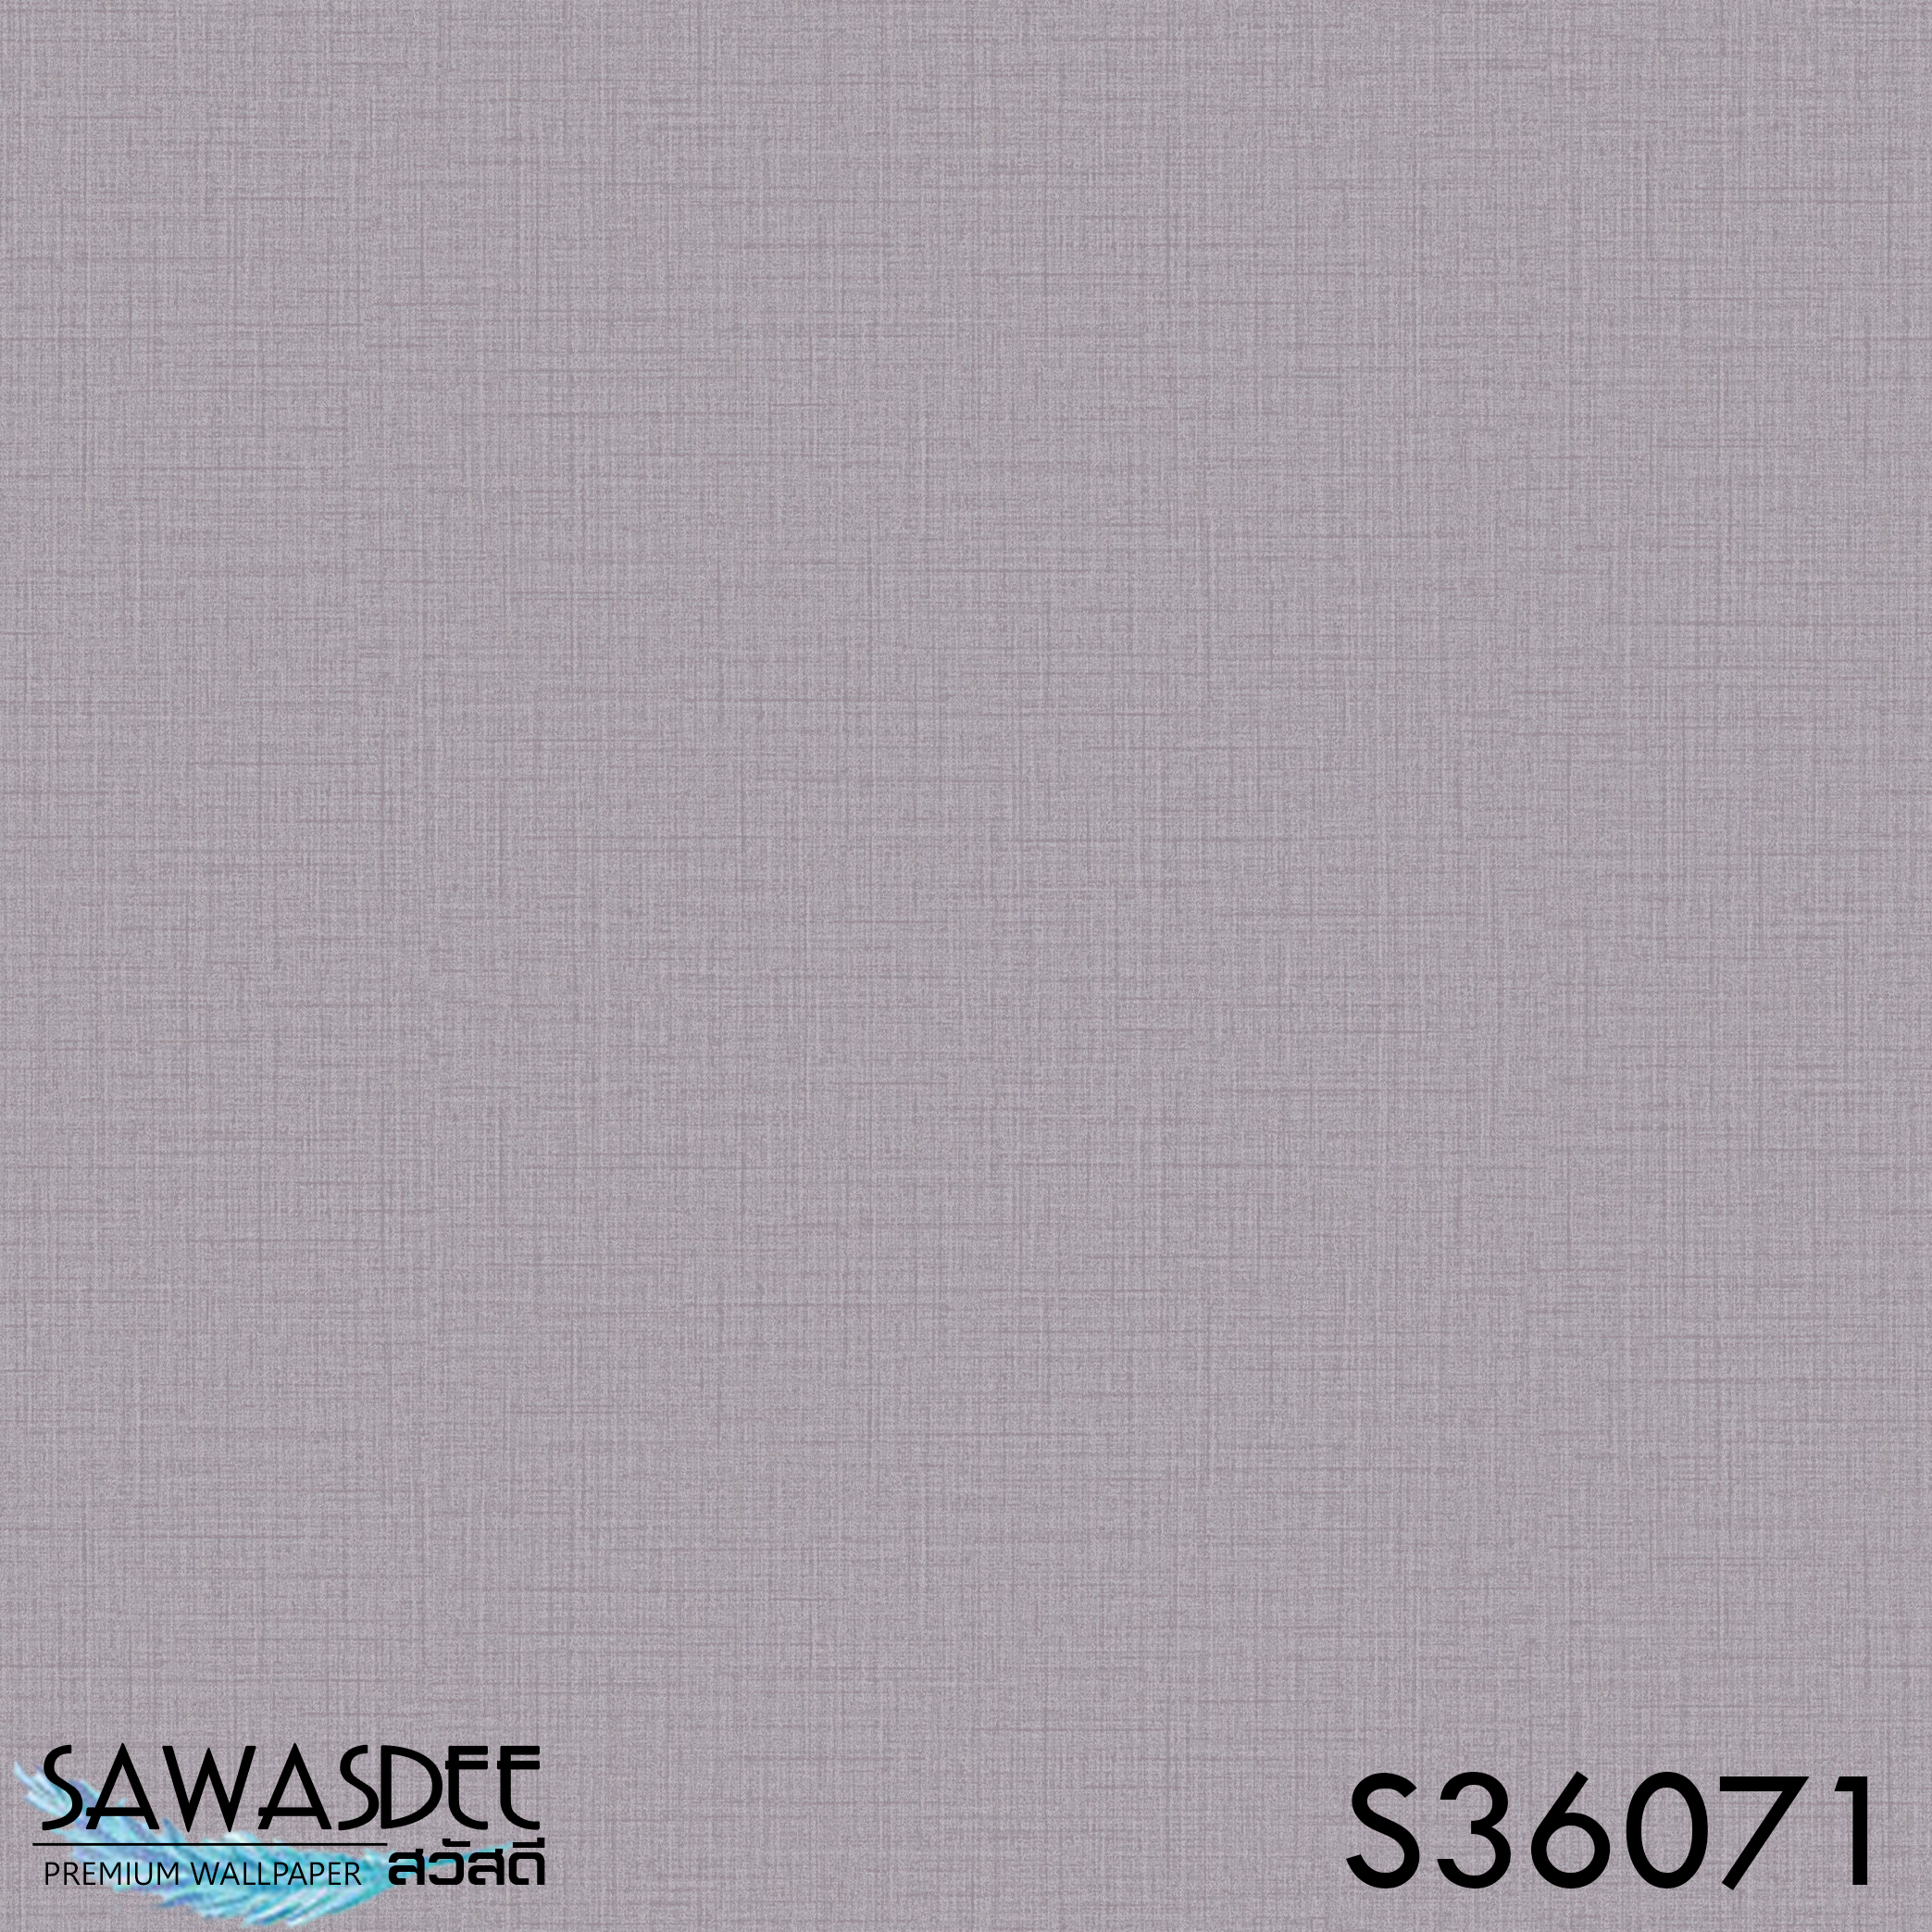 Wallpaper (SAWASDEE) S36071